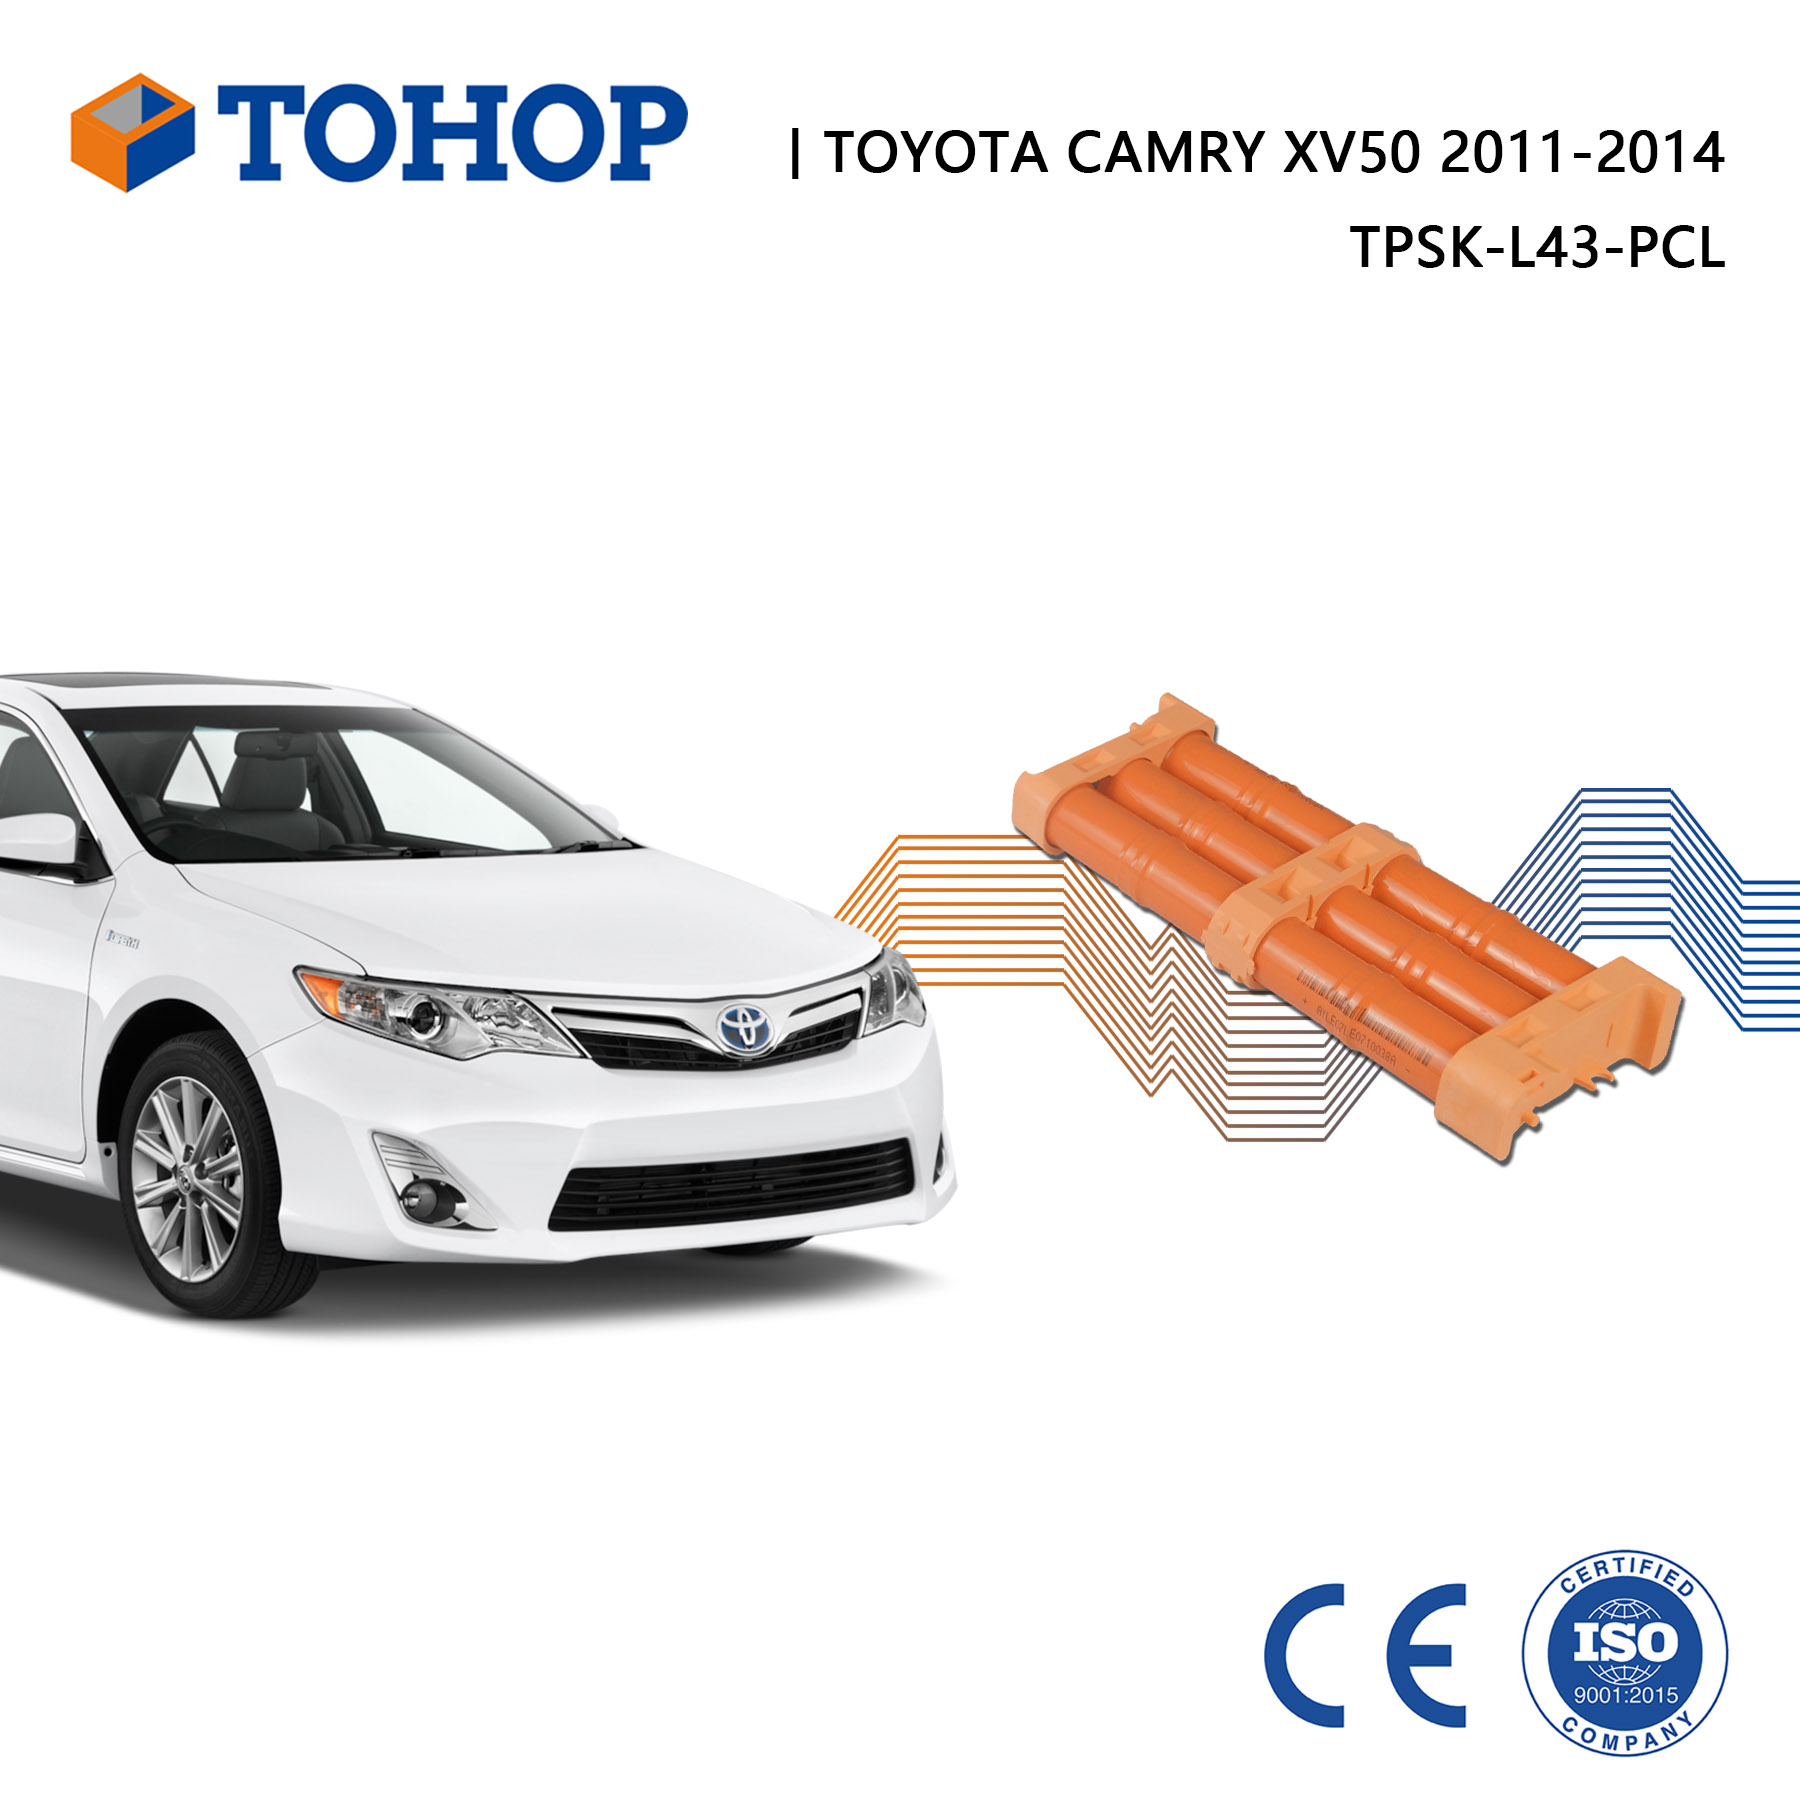 Batterie Hybride Toyota Camry XV50 2012 NI-Mh 14.4V/6.5Ah